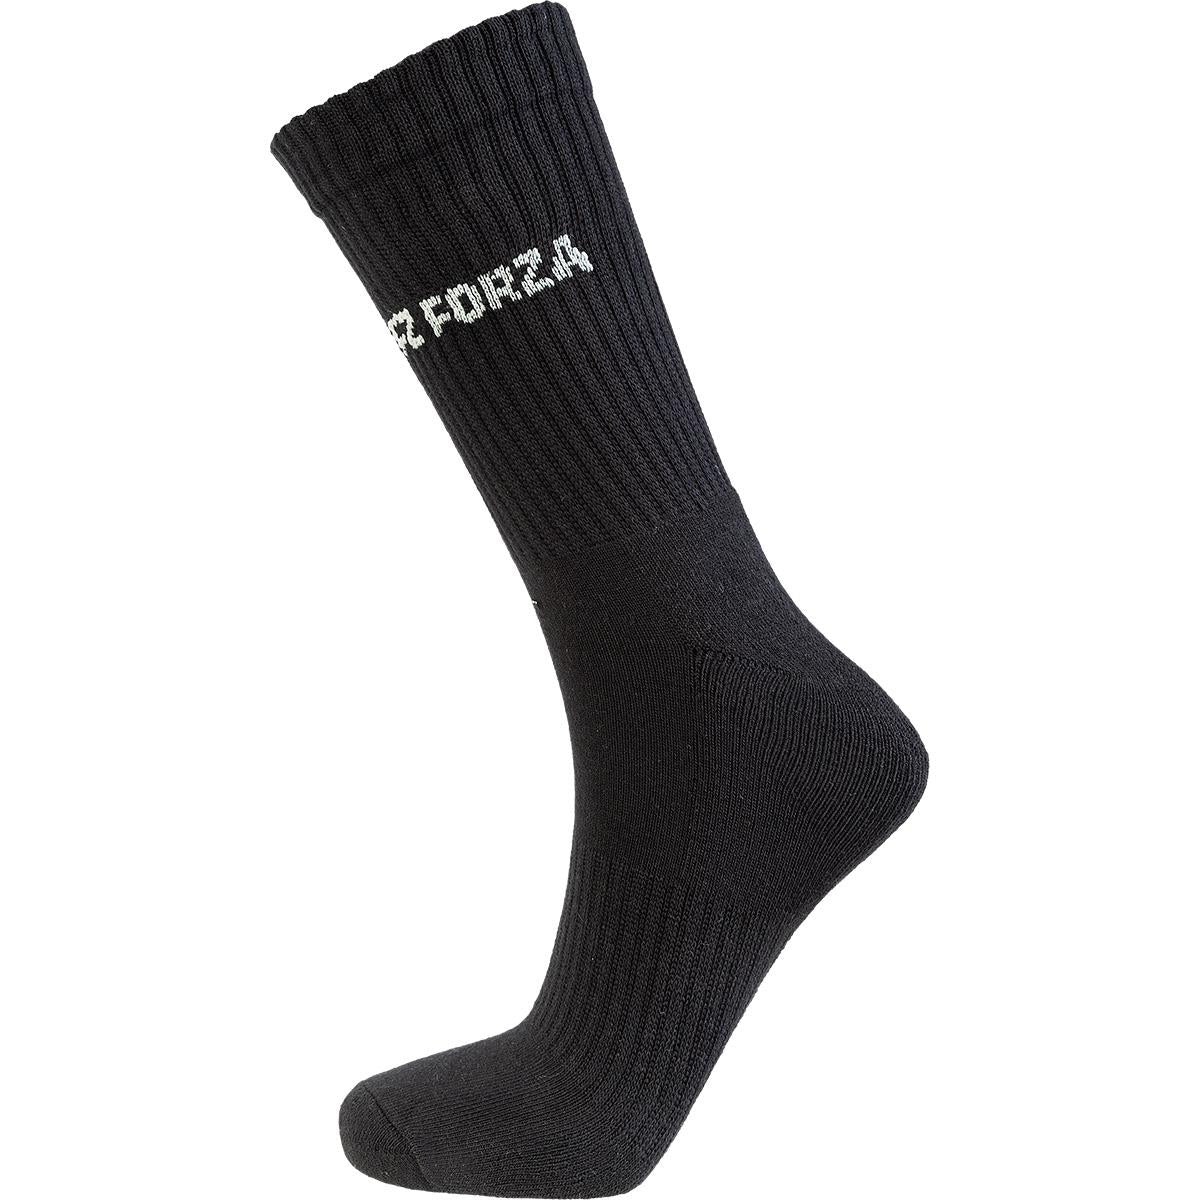 FZ Forza Comfort Long Black Badminton Socks - 1 Pair